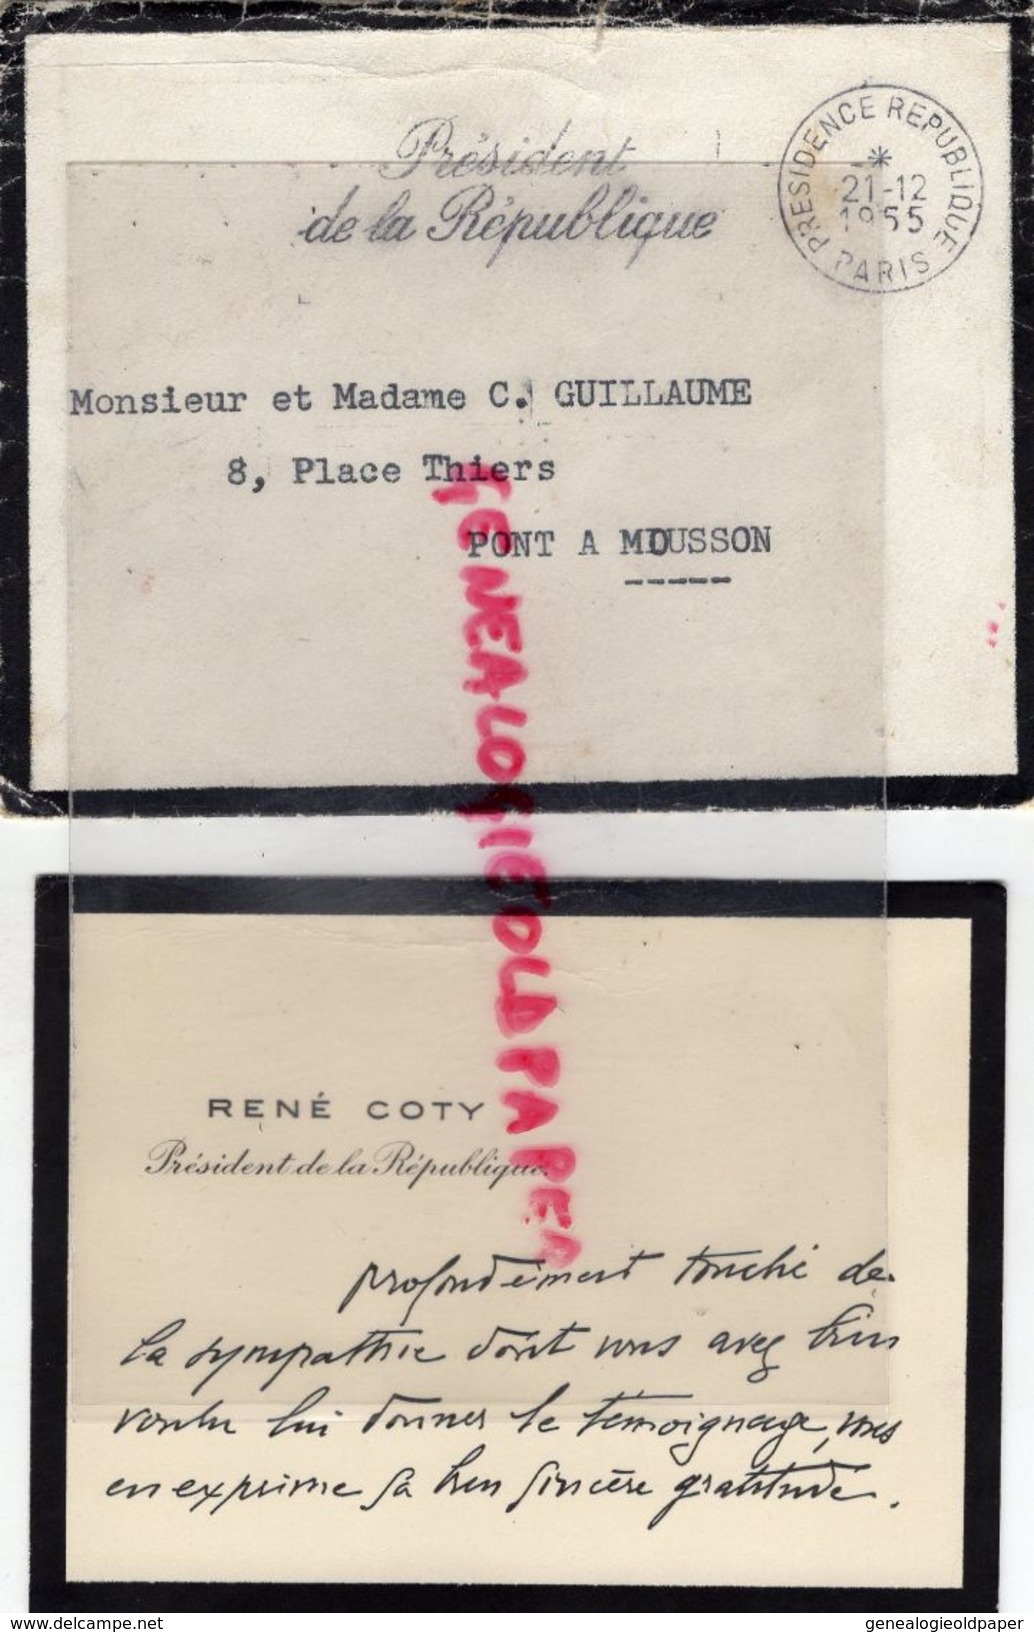 54- PONT A MOUSSON - RARE ENVELOPPE + CARTE MANUSCRITE PRESIDENT REPUBLIQUE RENE COTY A GUILLAUME 8 PLACE THIERS-1955 - Historical Documents